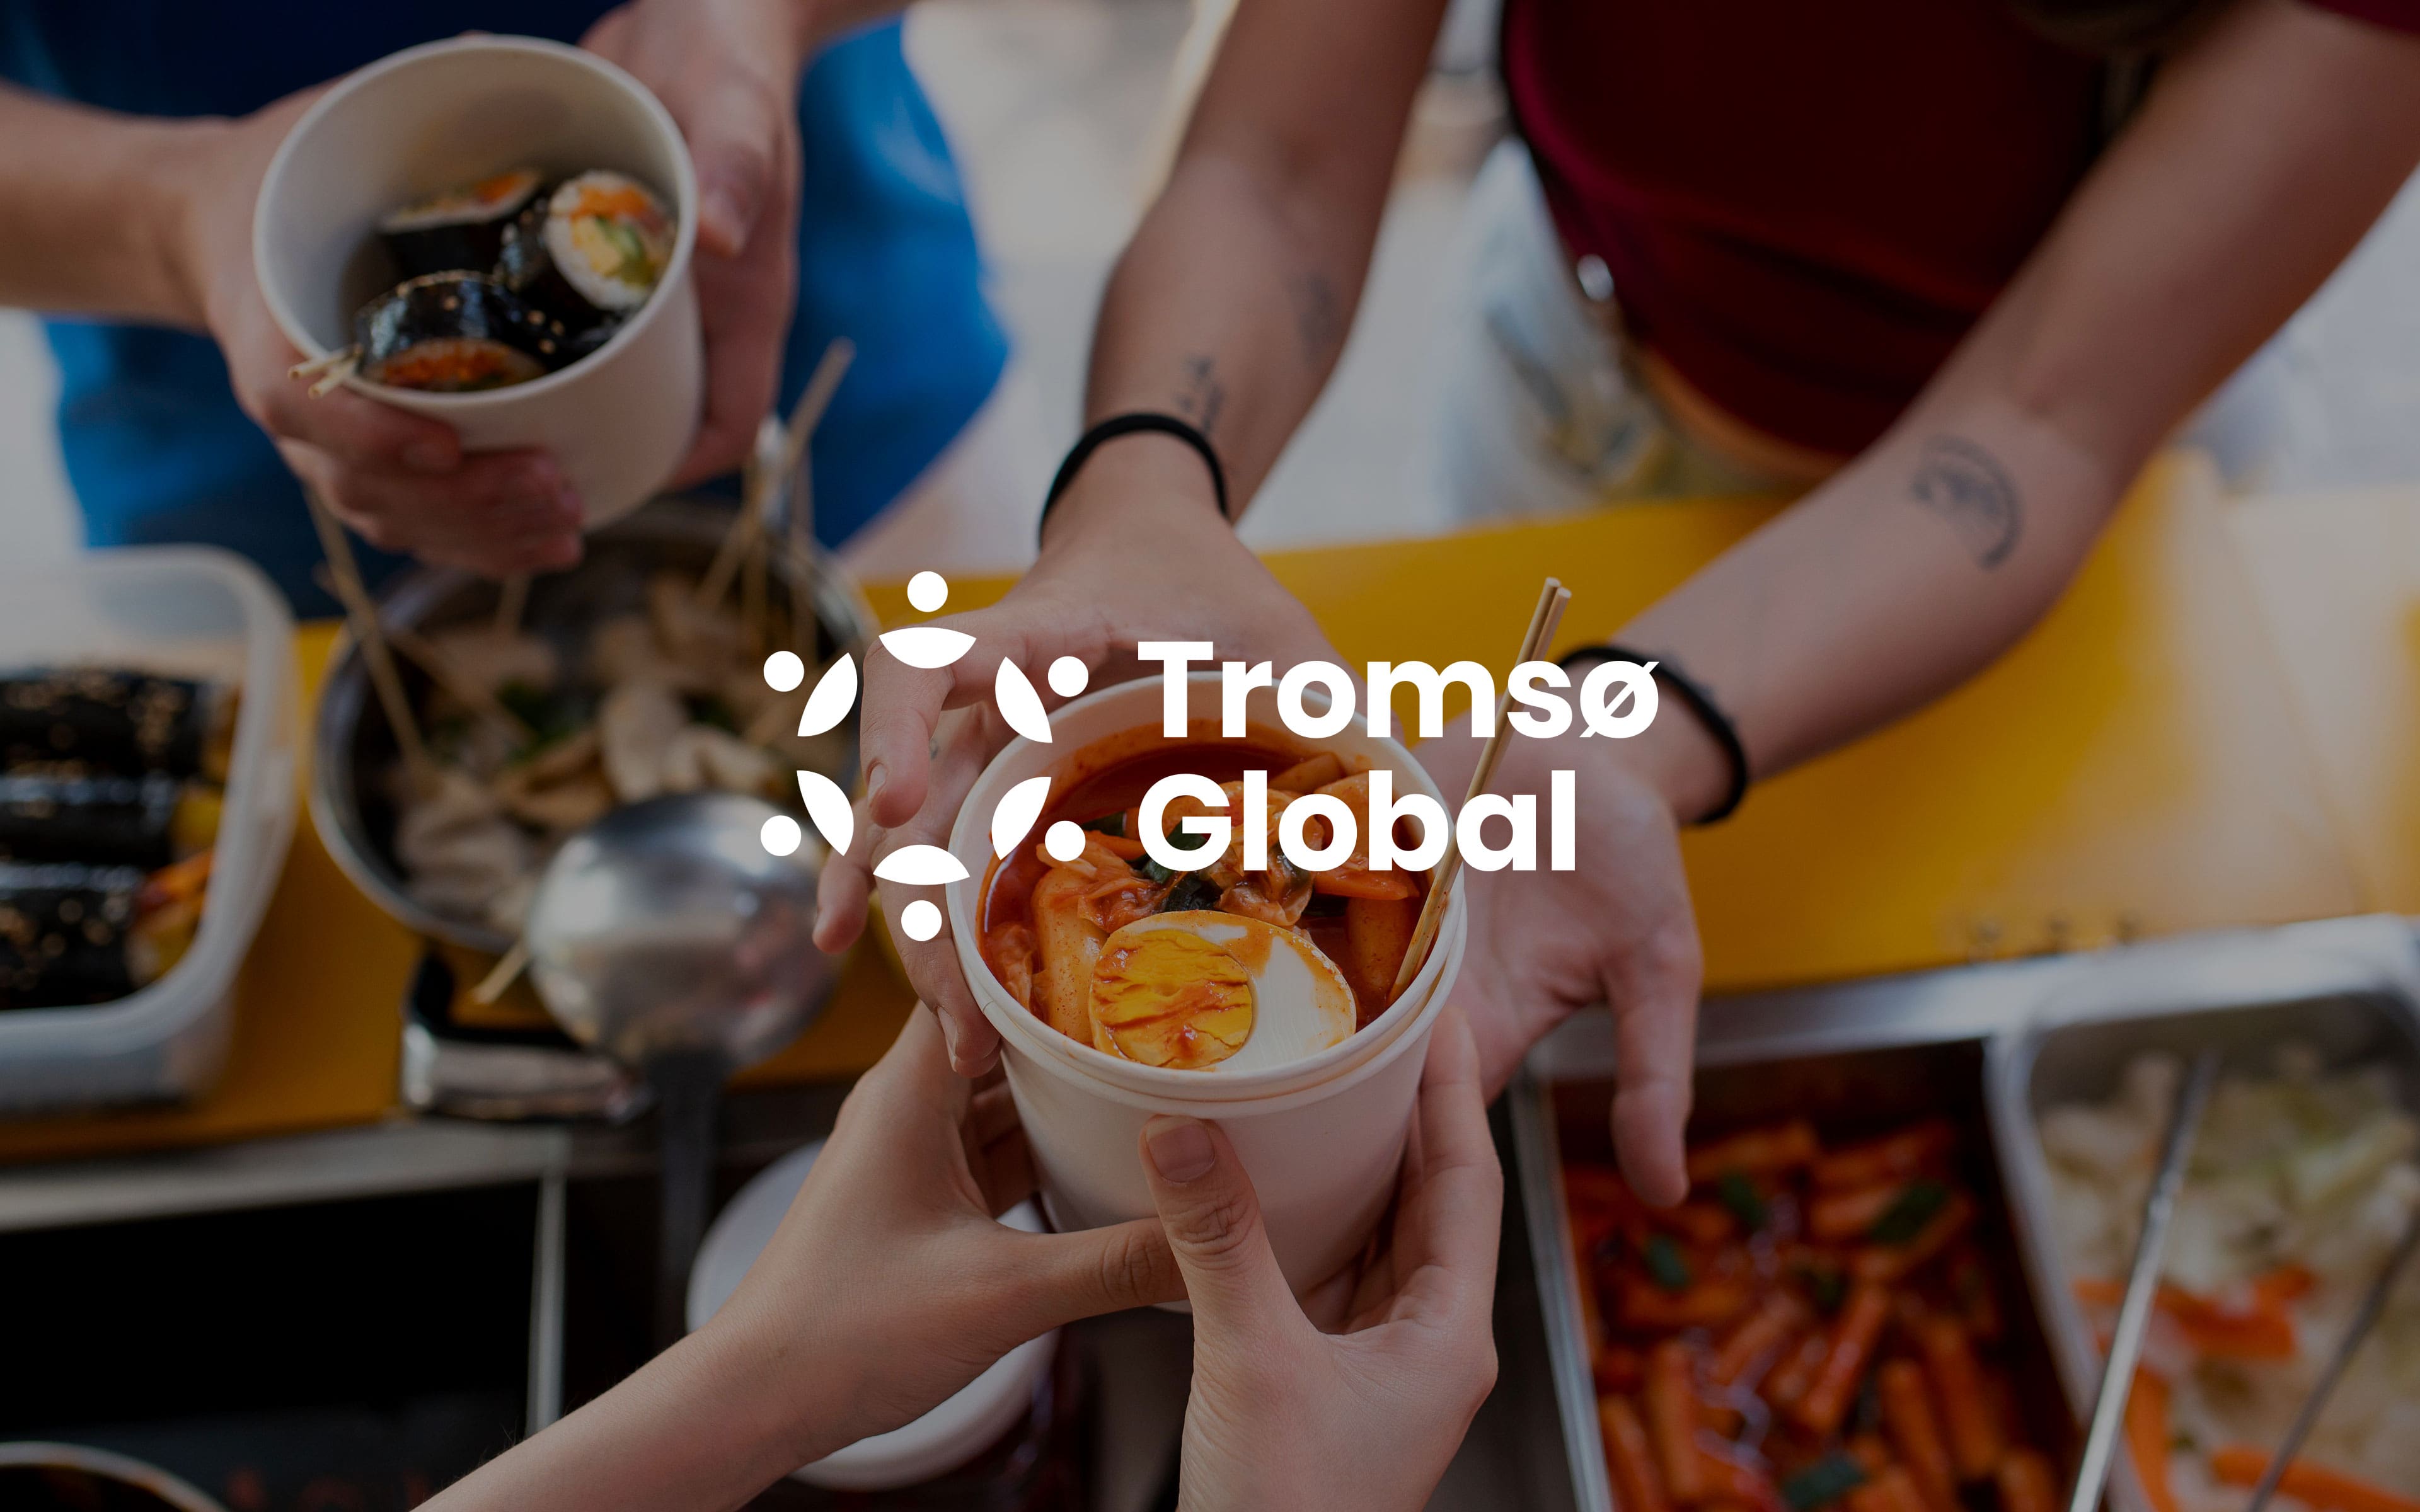 Tromso Global